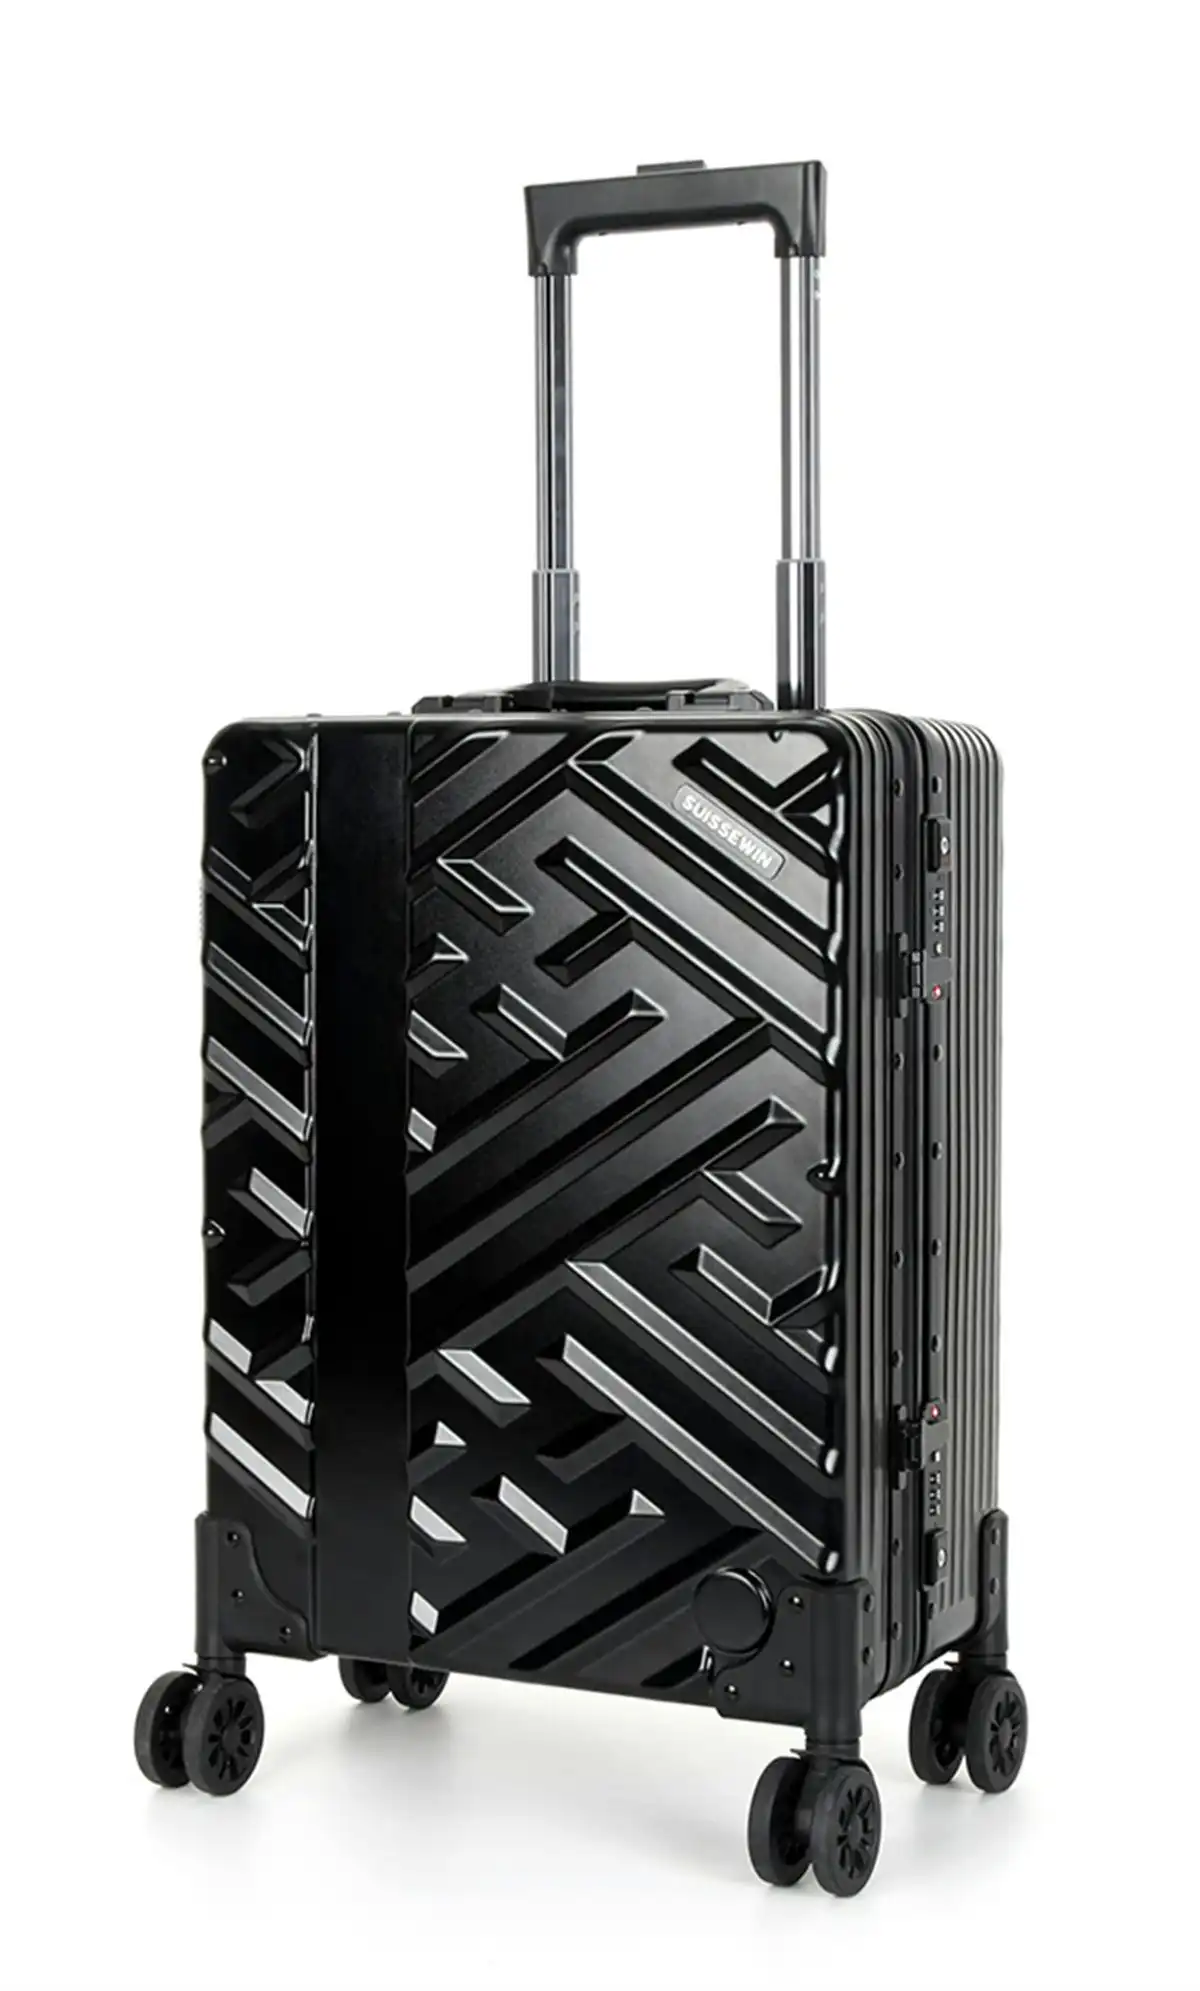 Suissewin Swiss Aluminium Luggage Suitcase Lightweight With TSA Locker 8 Wheels Carry on Hardcase SN7623A Black